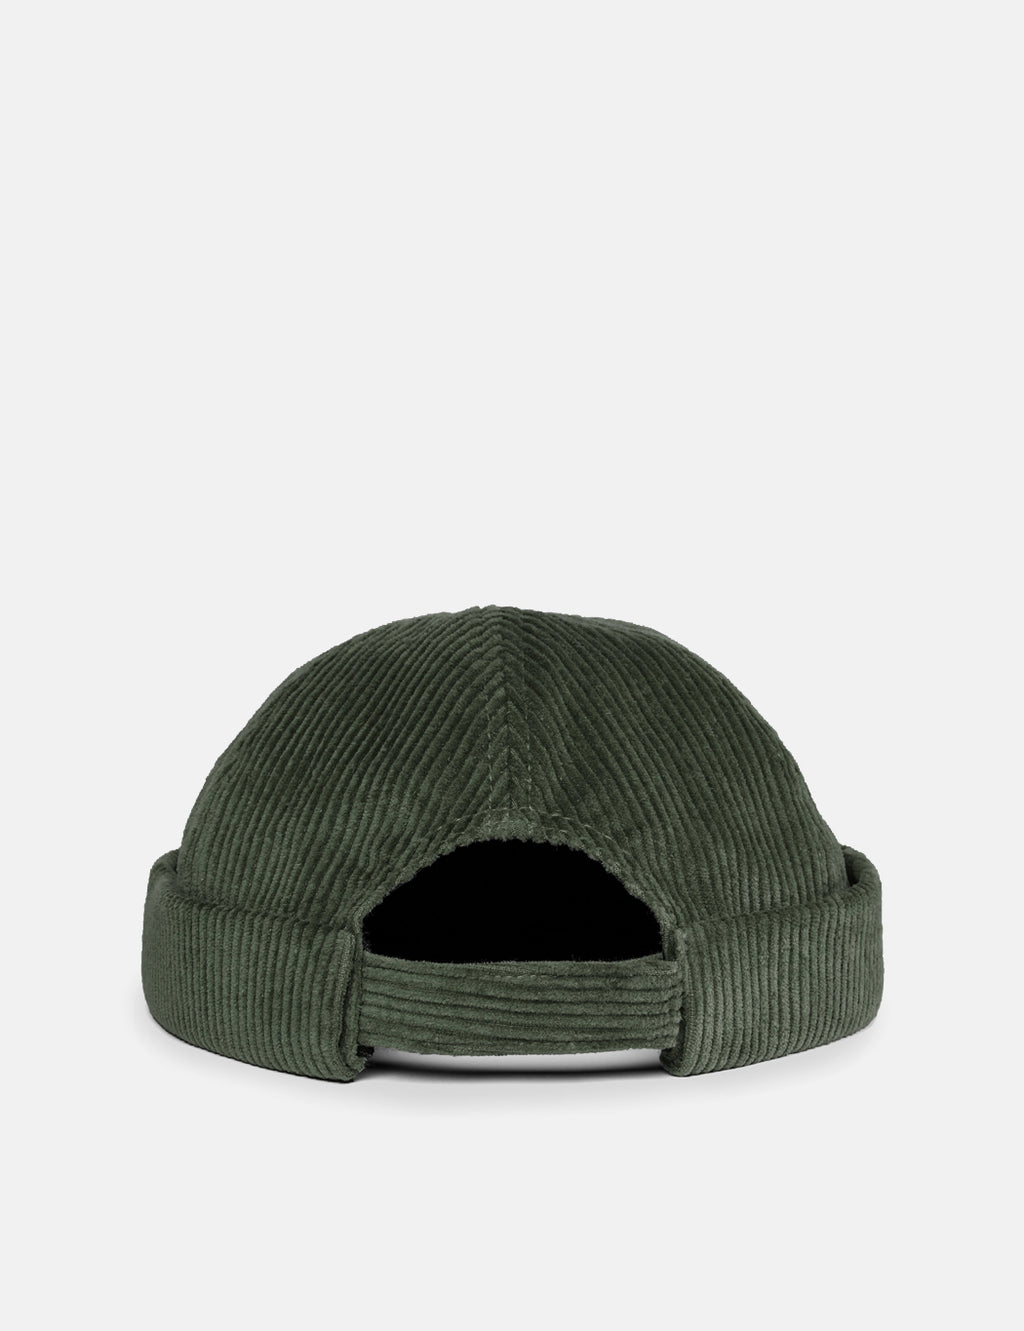 SCRT Docker Beanie Hat (Cord) - Olive Green | URBAN EXCESS.